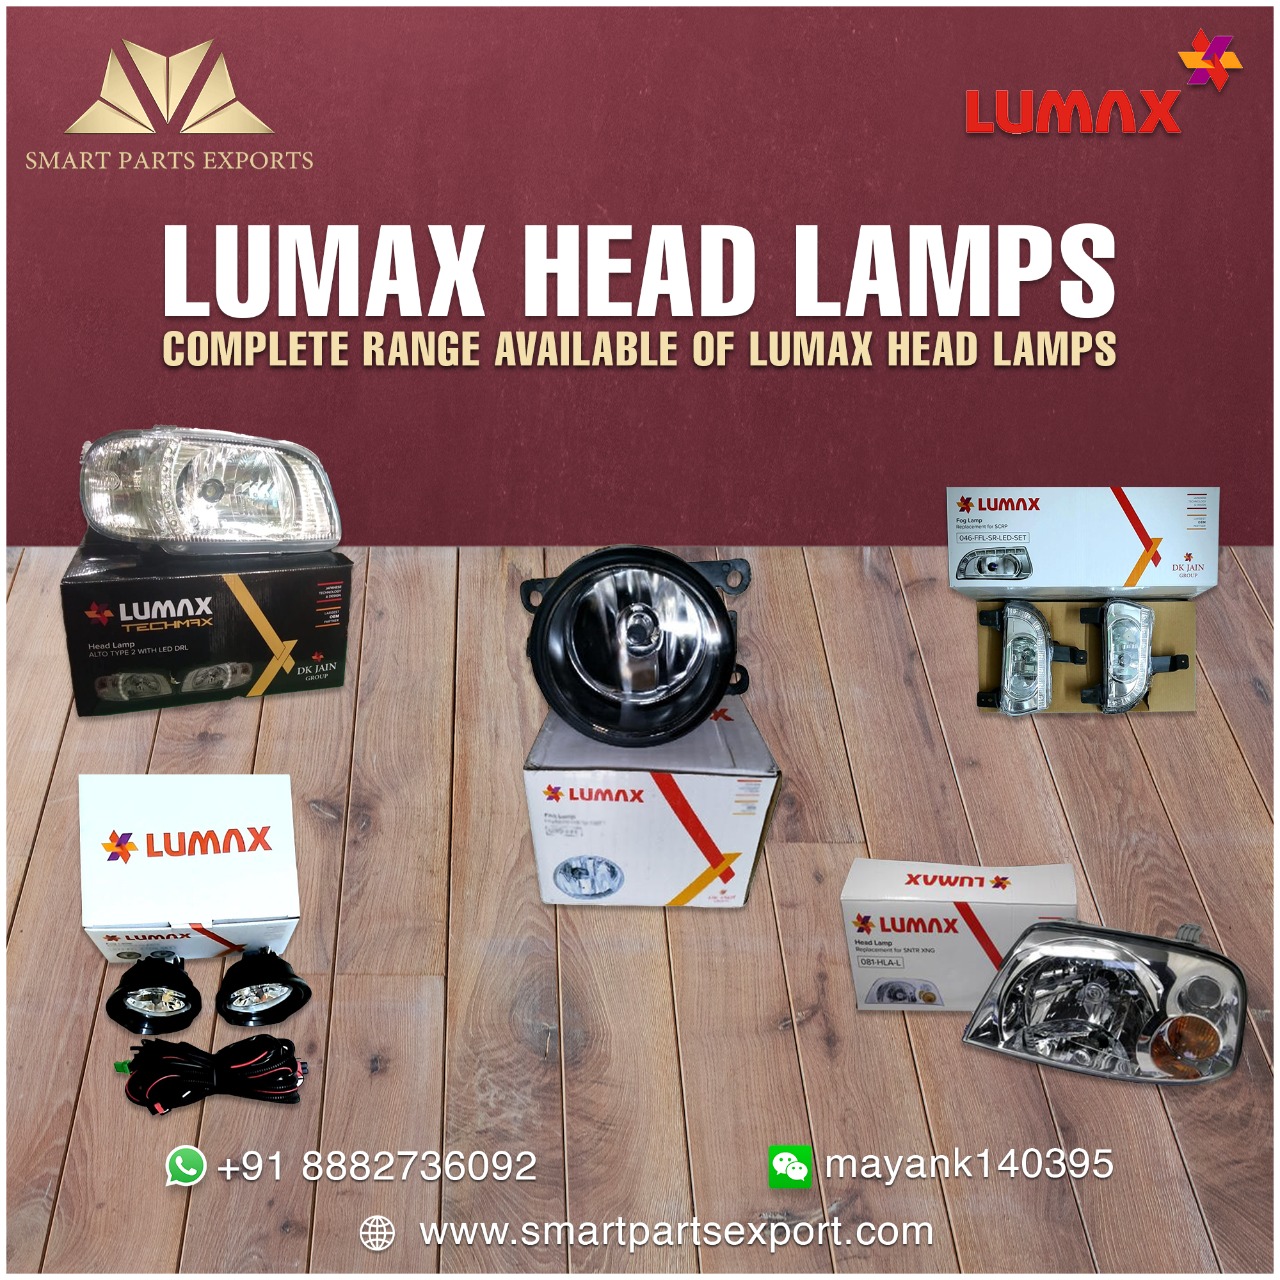 Lumax headlamps